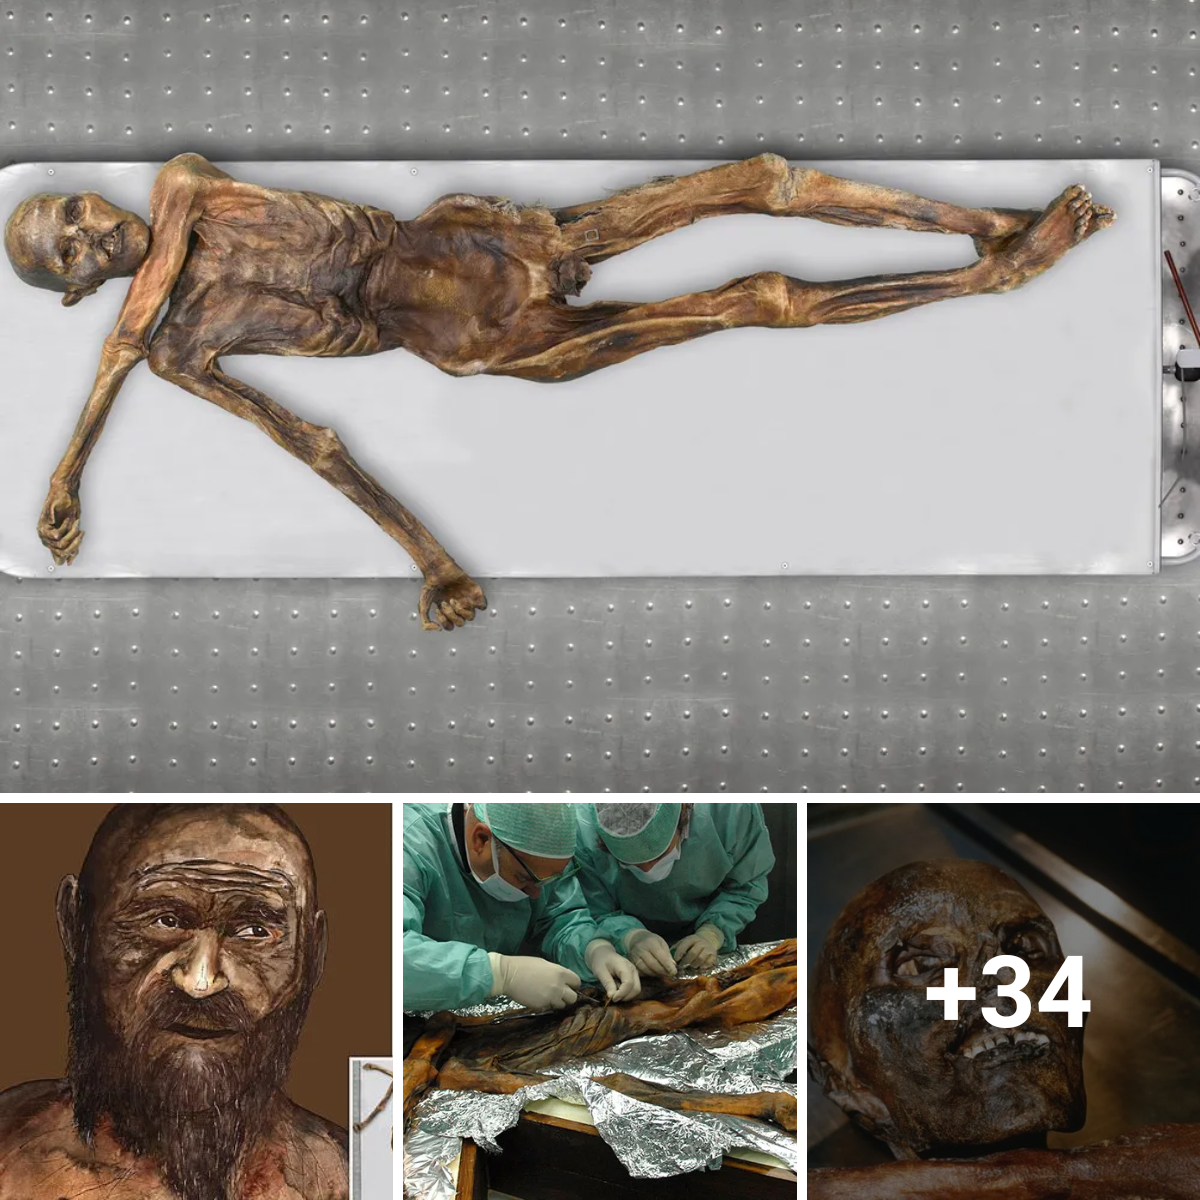 Ötzi Mummy: In the Ötztal Alps, two German mountaineers found a frozen mummy in 1991.